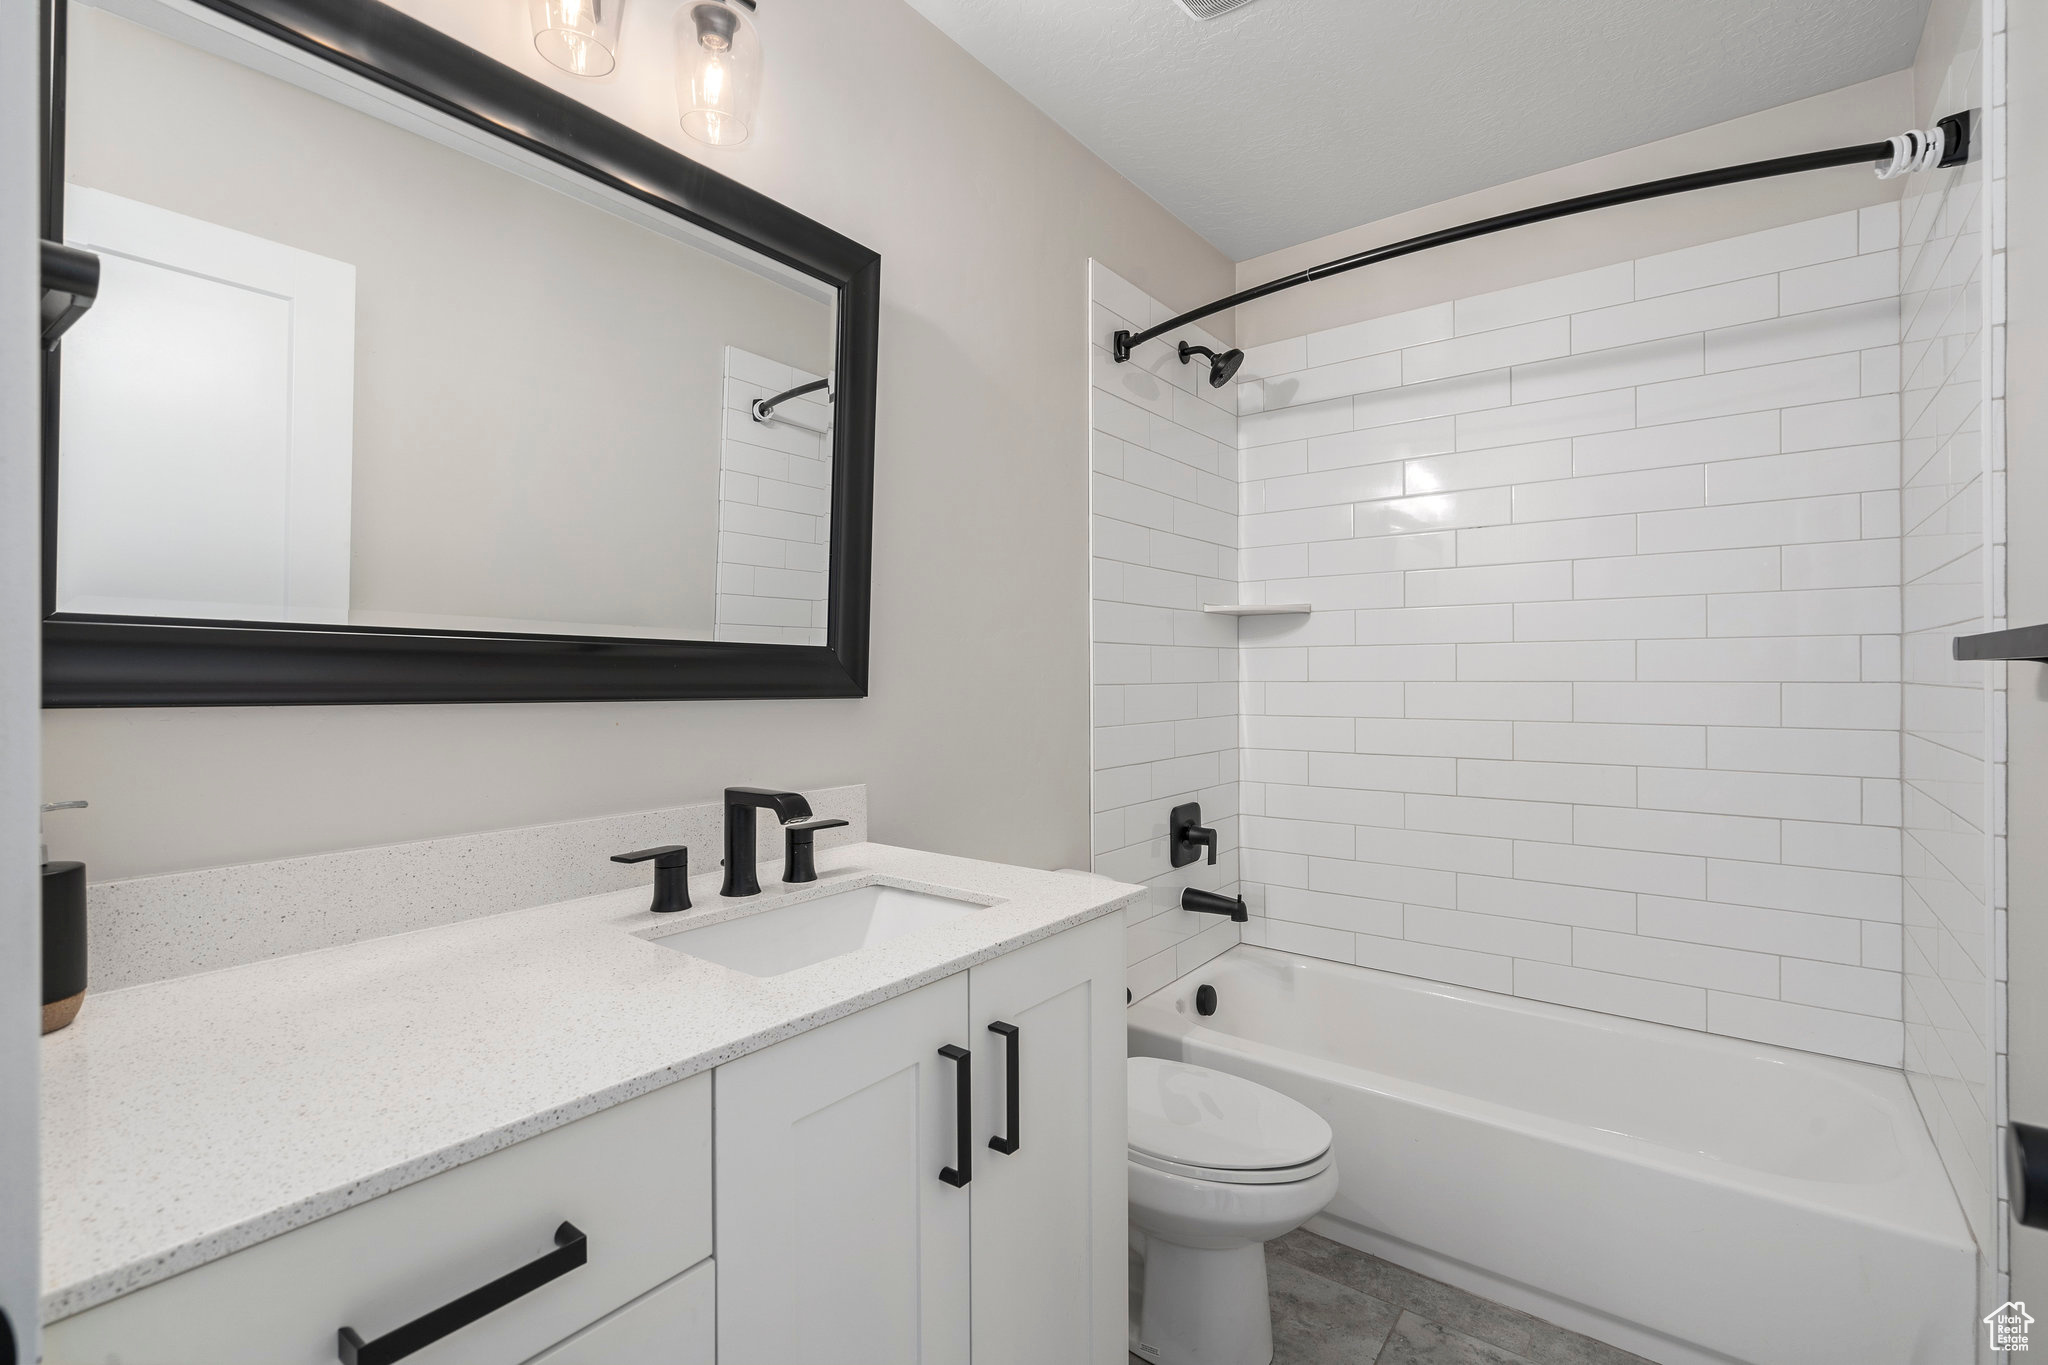 Full bathroom with tiled shower / bath, tile floors, toilet, and vanity